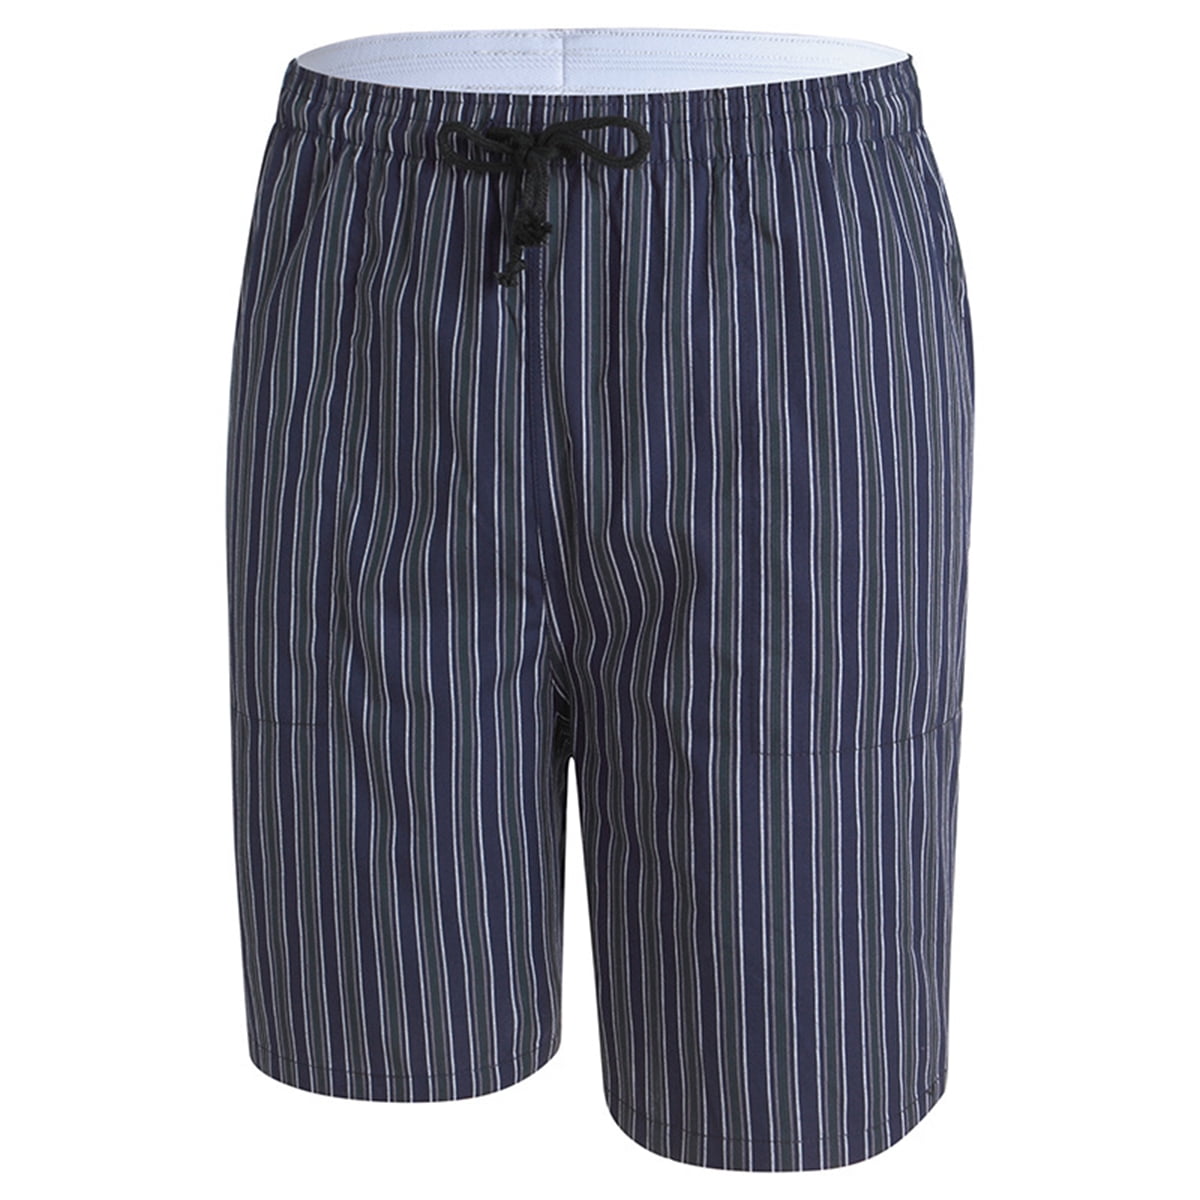 Allgood Men's Striped Cotton Sleep Shorts - Navy